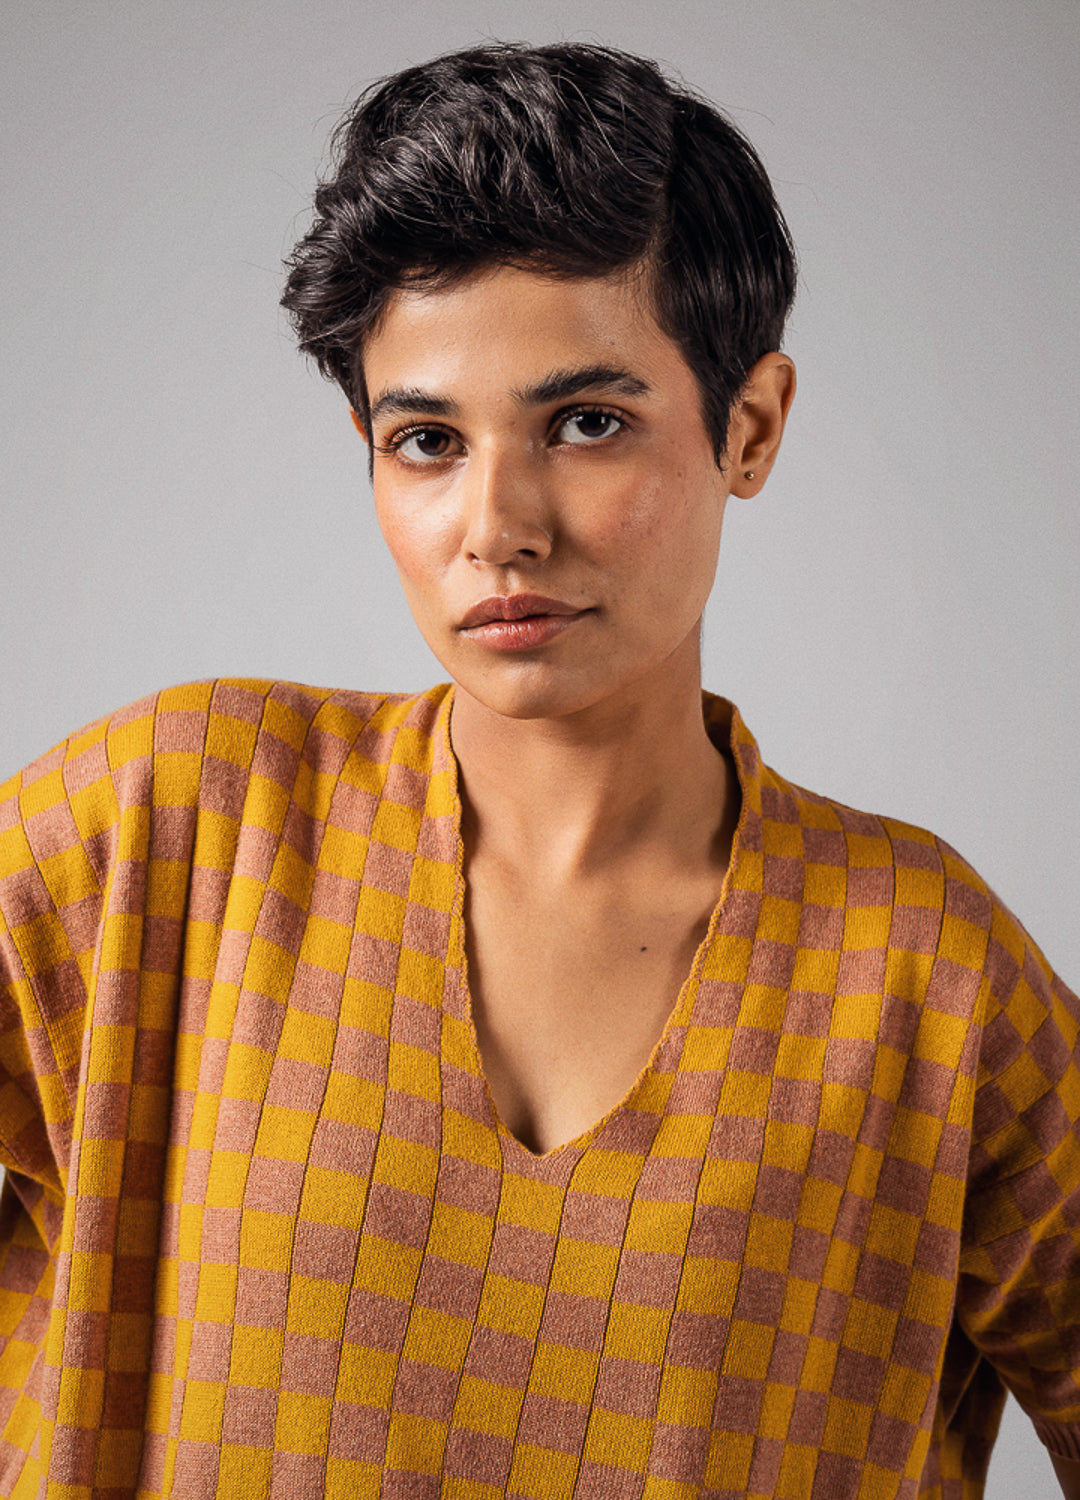 Rhubarb Checker Yellow Organic Cotton Knit Top For Women Online